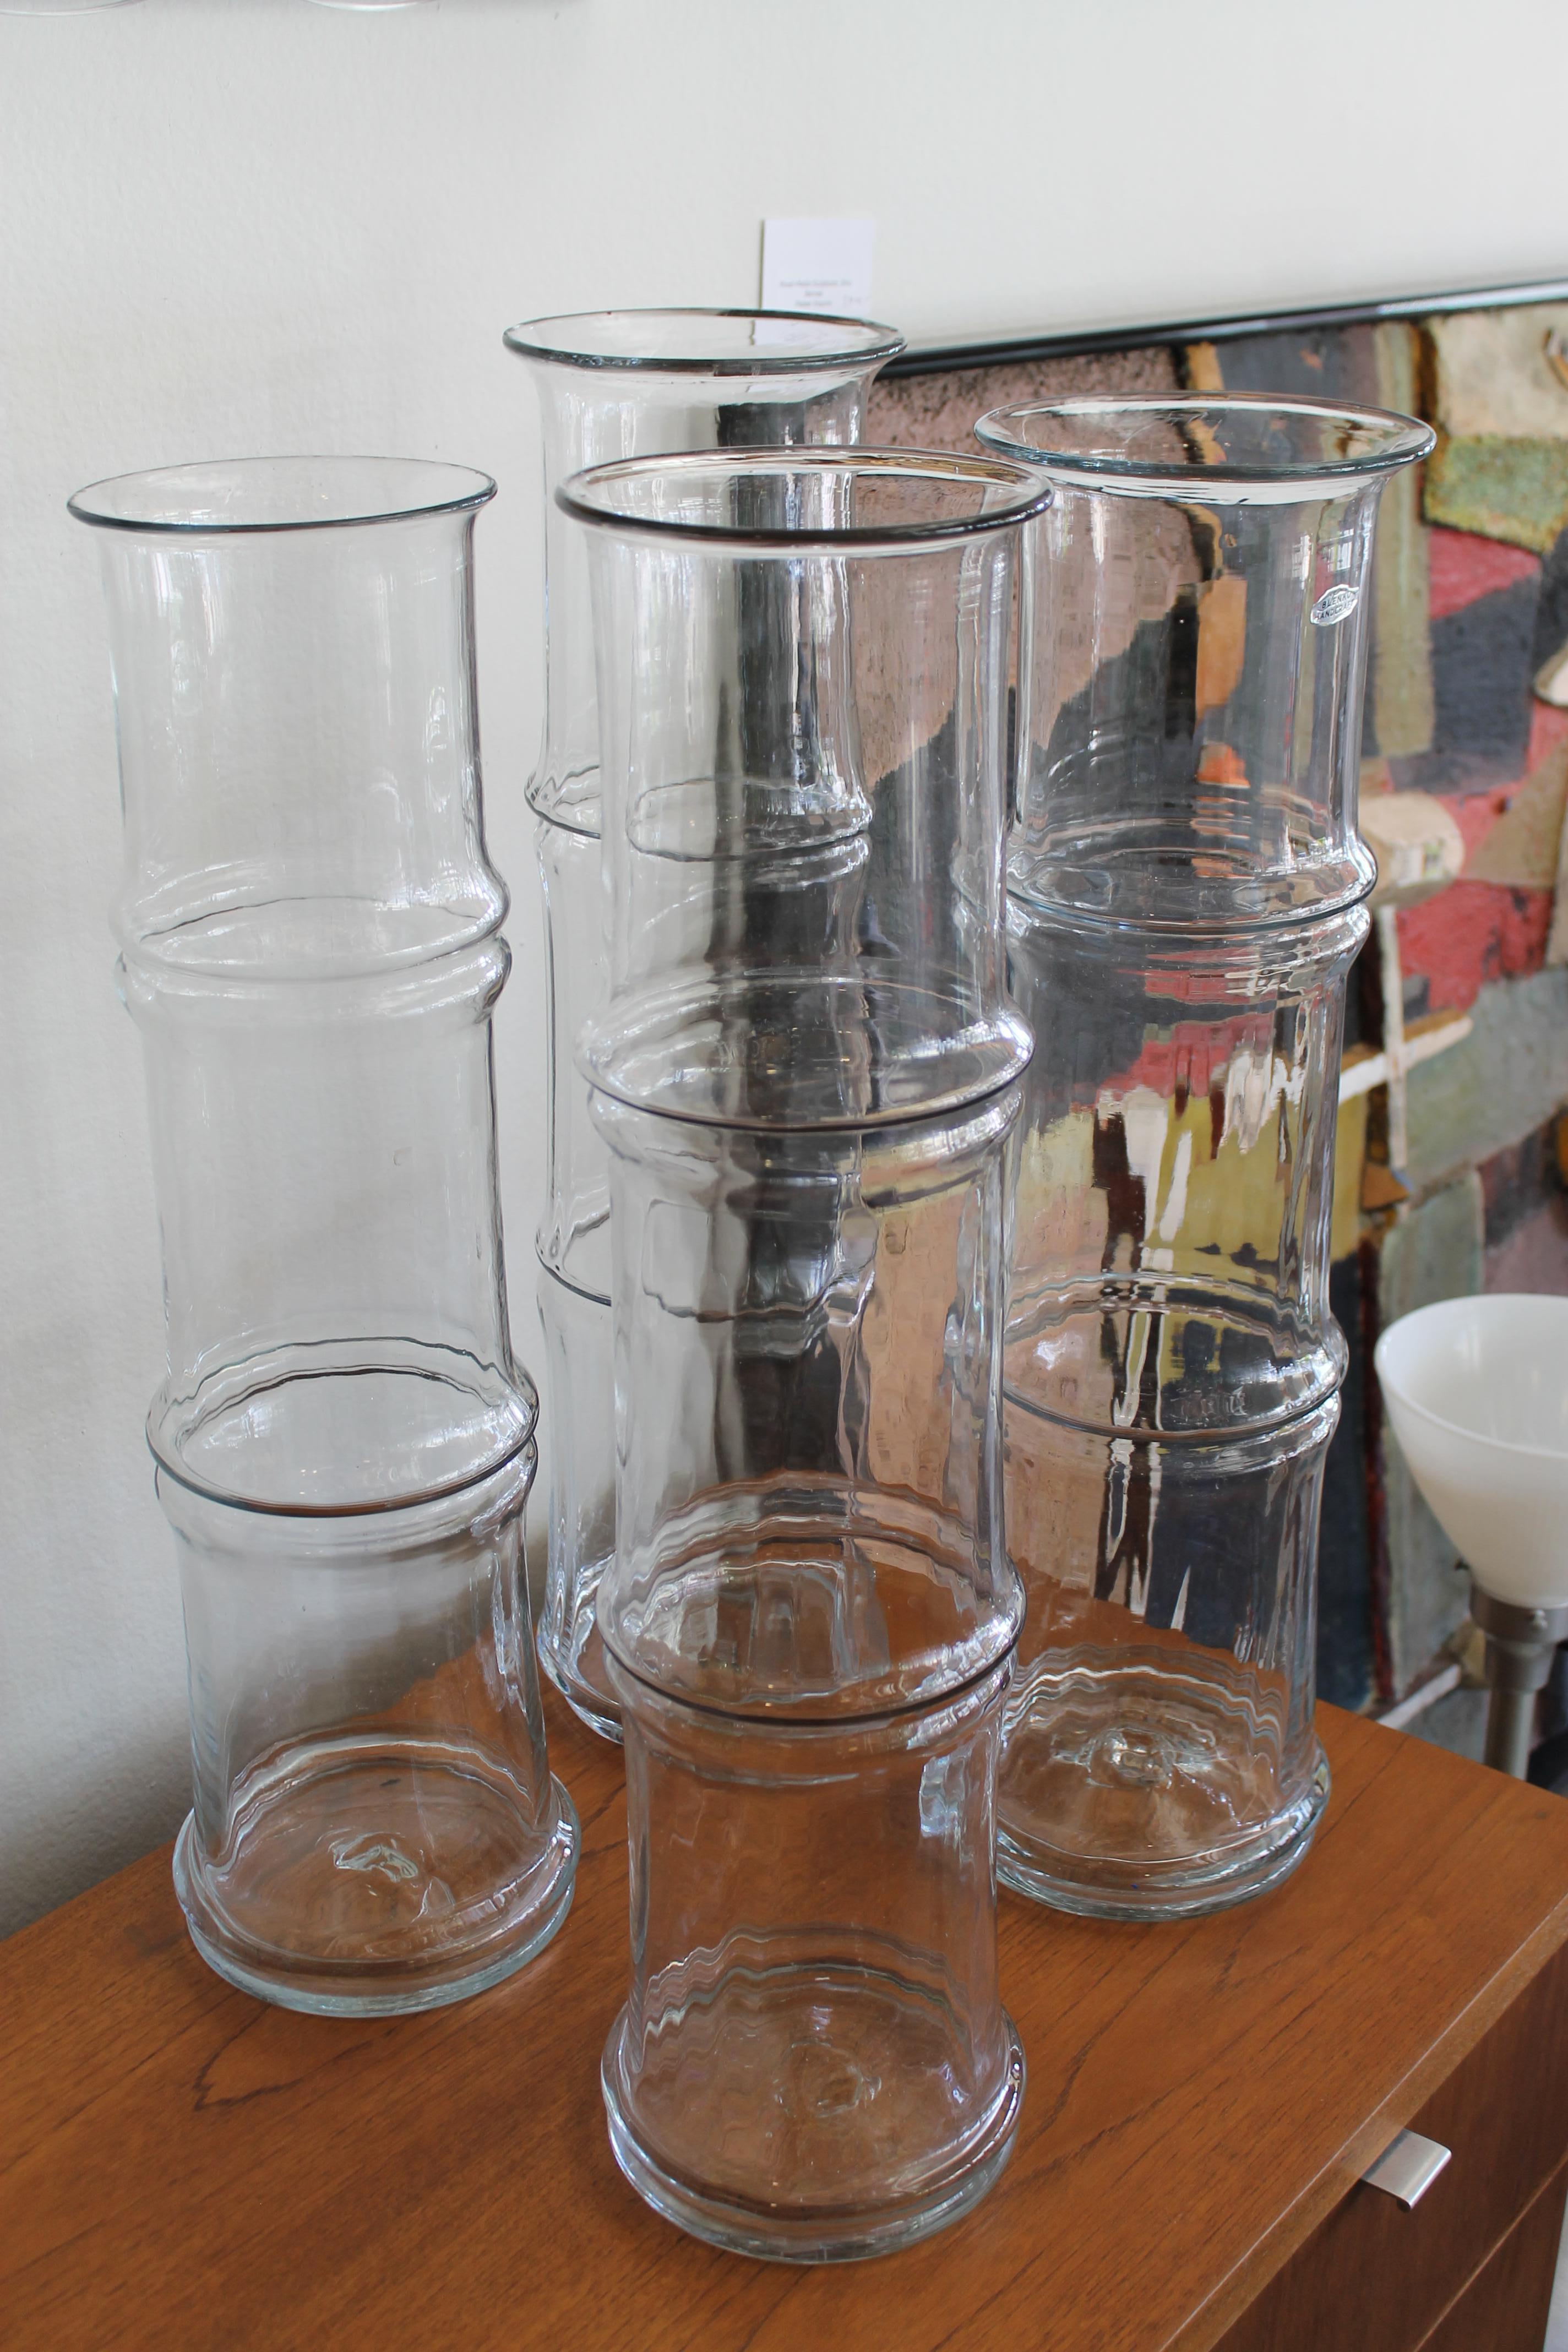 One vase has a silver label that says Blenko Handcraft. Vases measure between 24